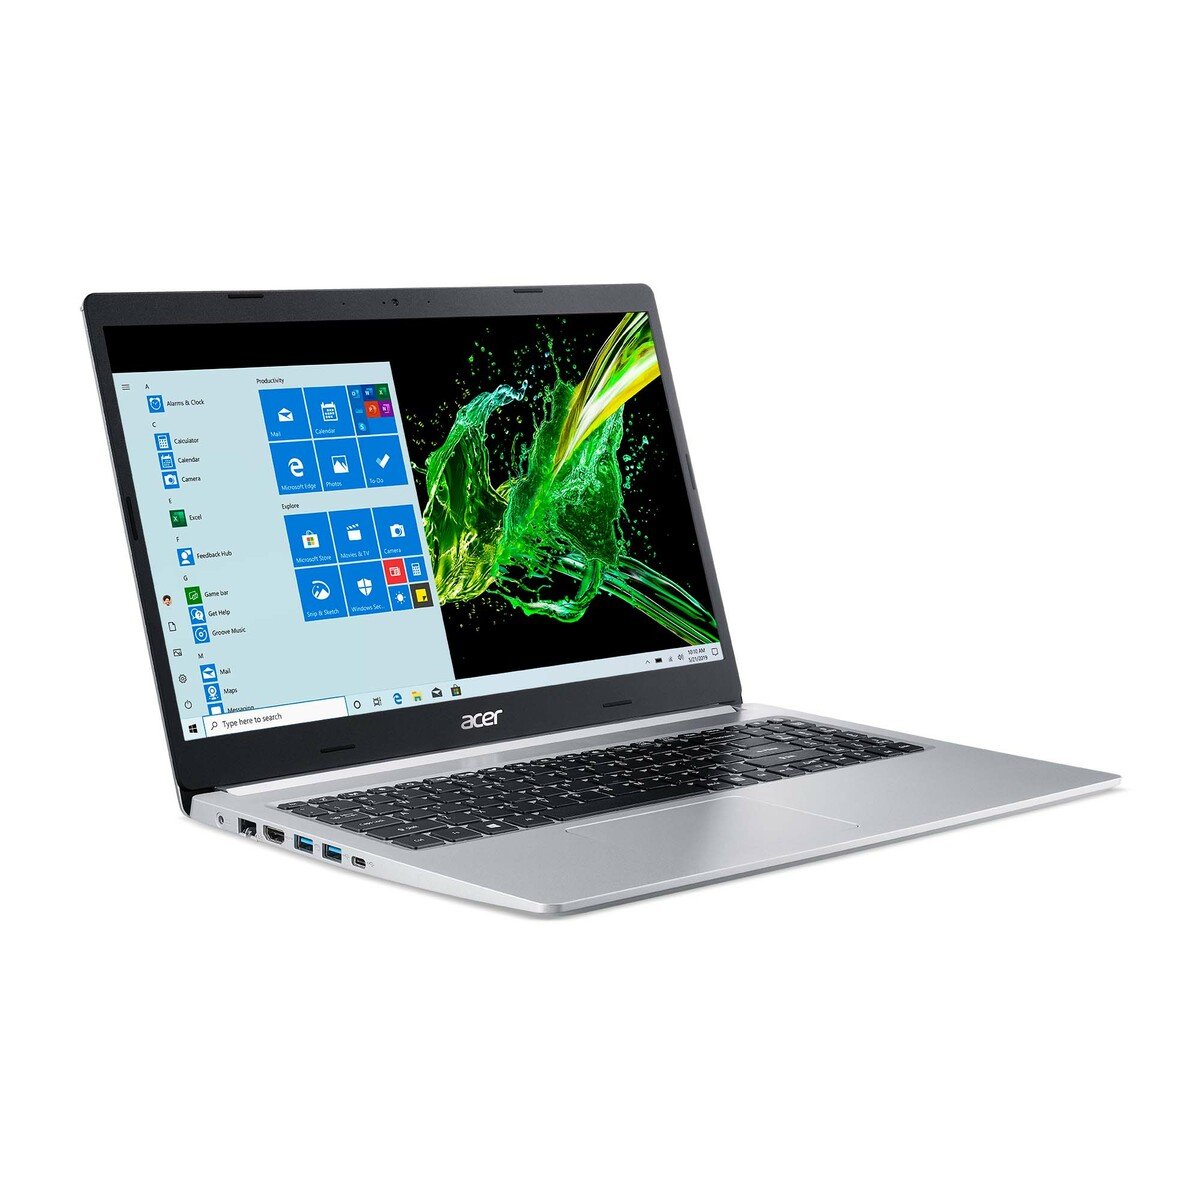 Acer Aspire 5 A515-NXHZHEM004  Intel Core i7-1065G7, 12GB RAM, 1TB HDD + 256GB SSD, 2 GB NVIDIA Graphics, 15.6 inch Screen, Windows 10 Home, Silver